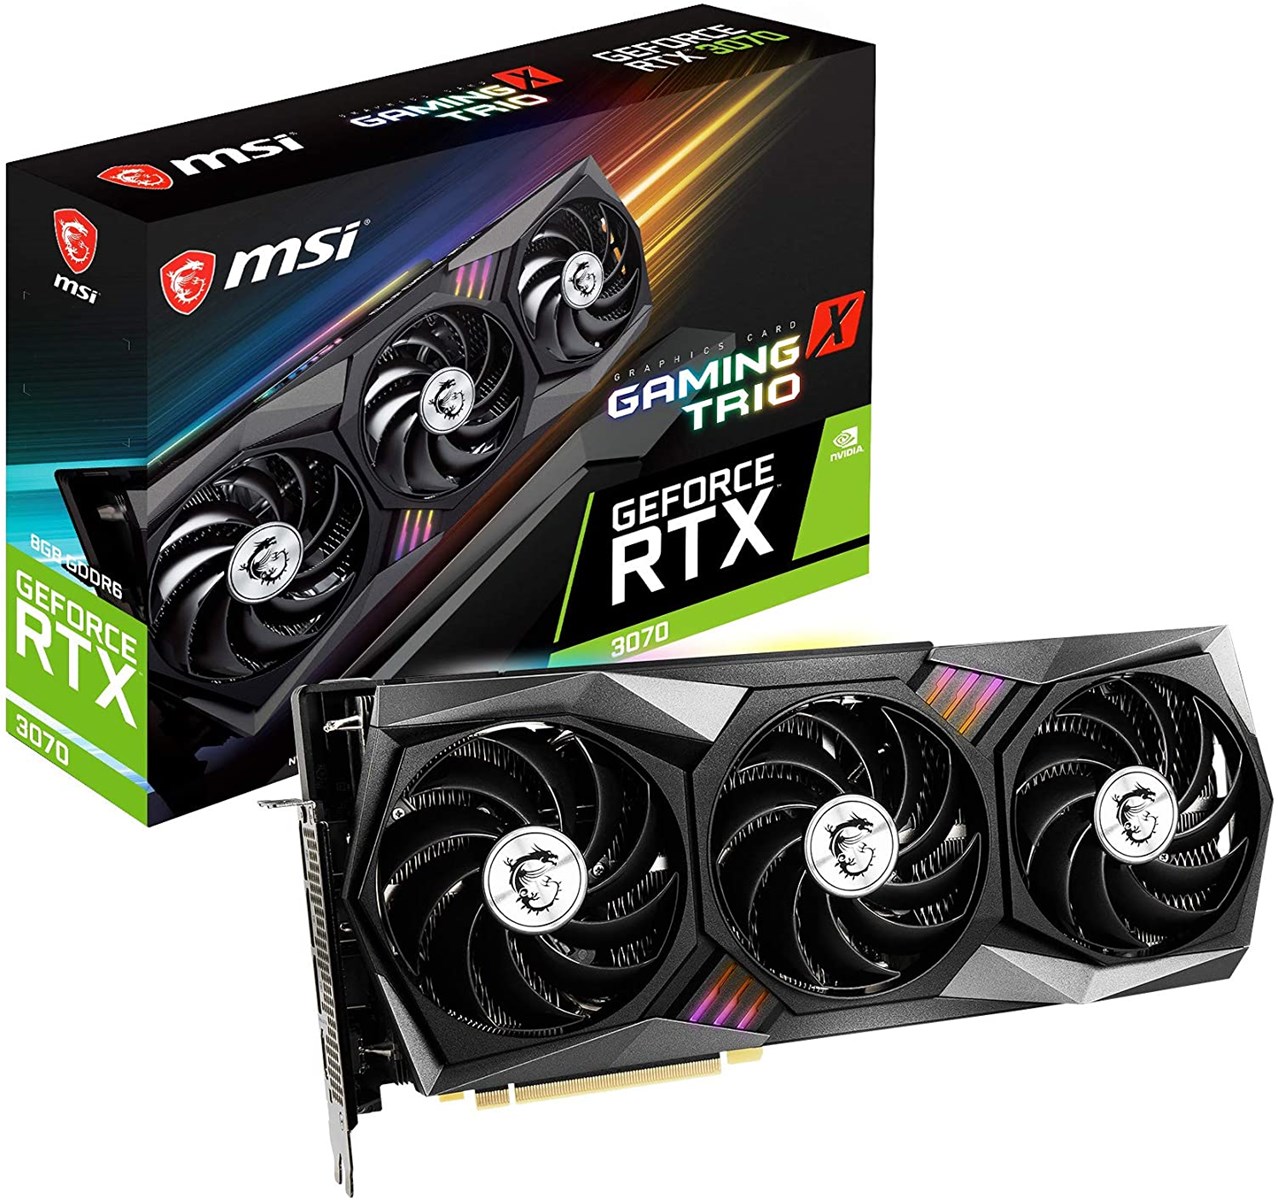 MSI GeForce RTX 3070 Gaming X TRIO Graphics Card